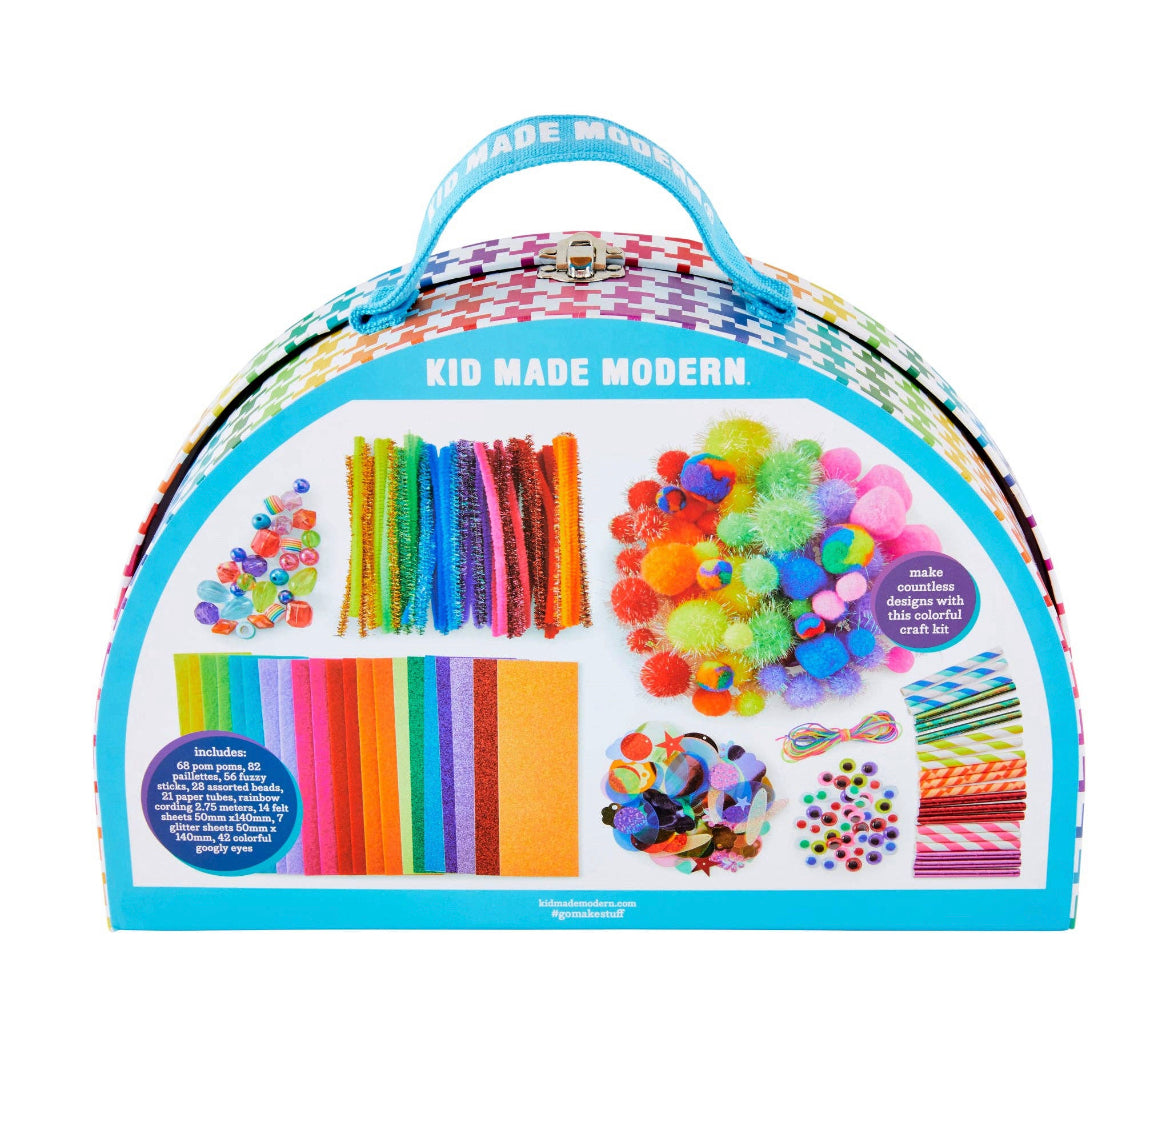 Kid made modern Rainbow craft kit